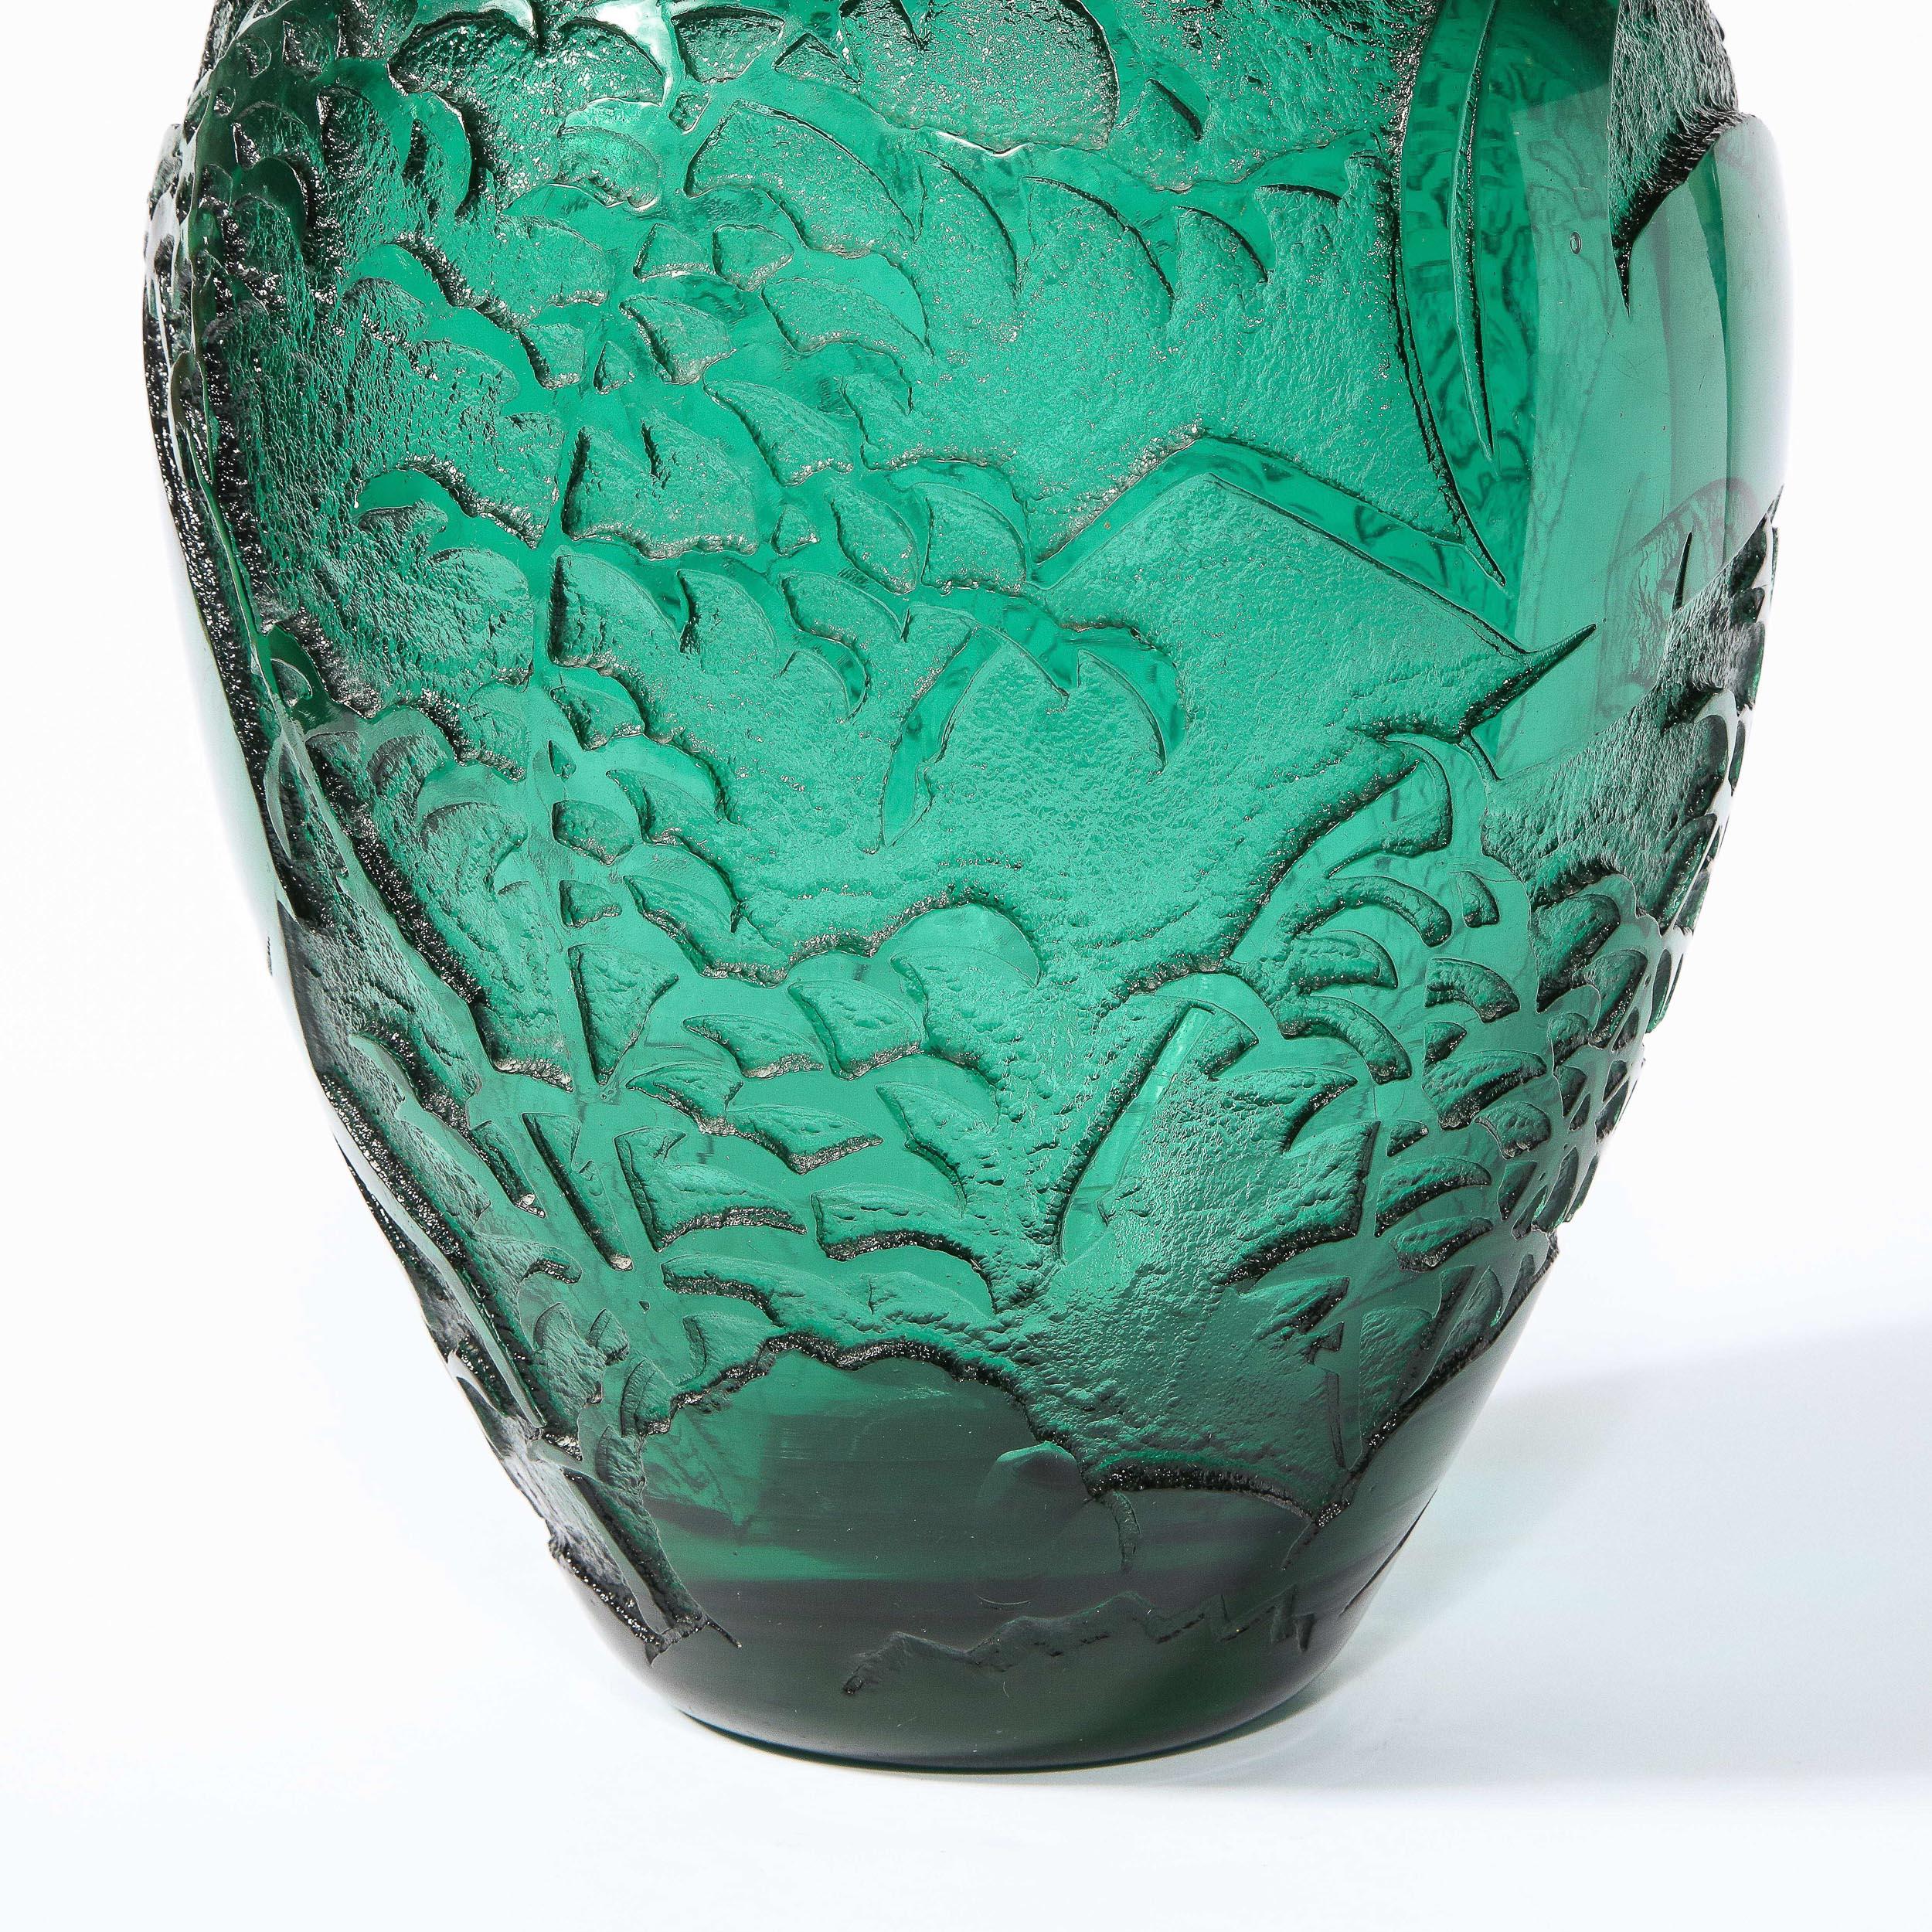 Early 20th Century Art Deco Handblown Teal Vase w/ Stylized Ibis & Cloud Motifs Signed Daum Nancy